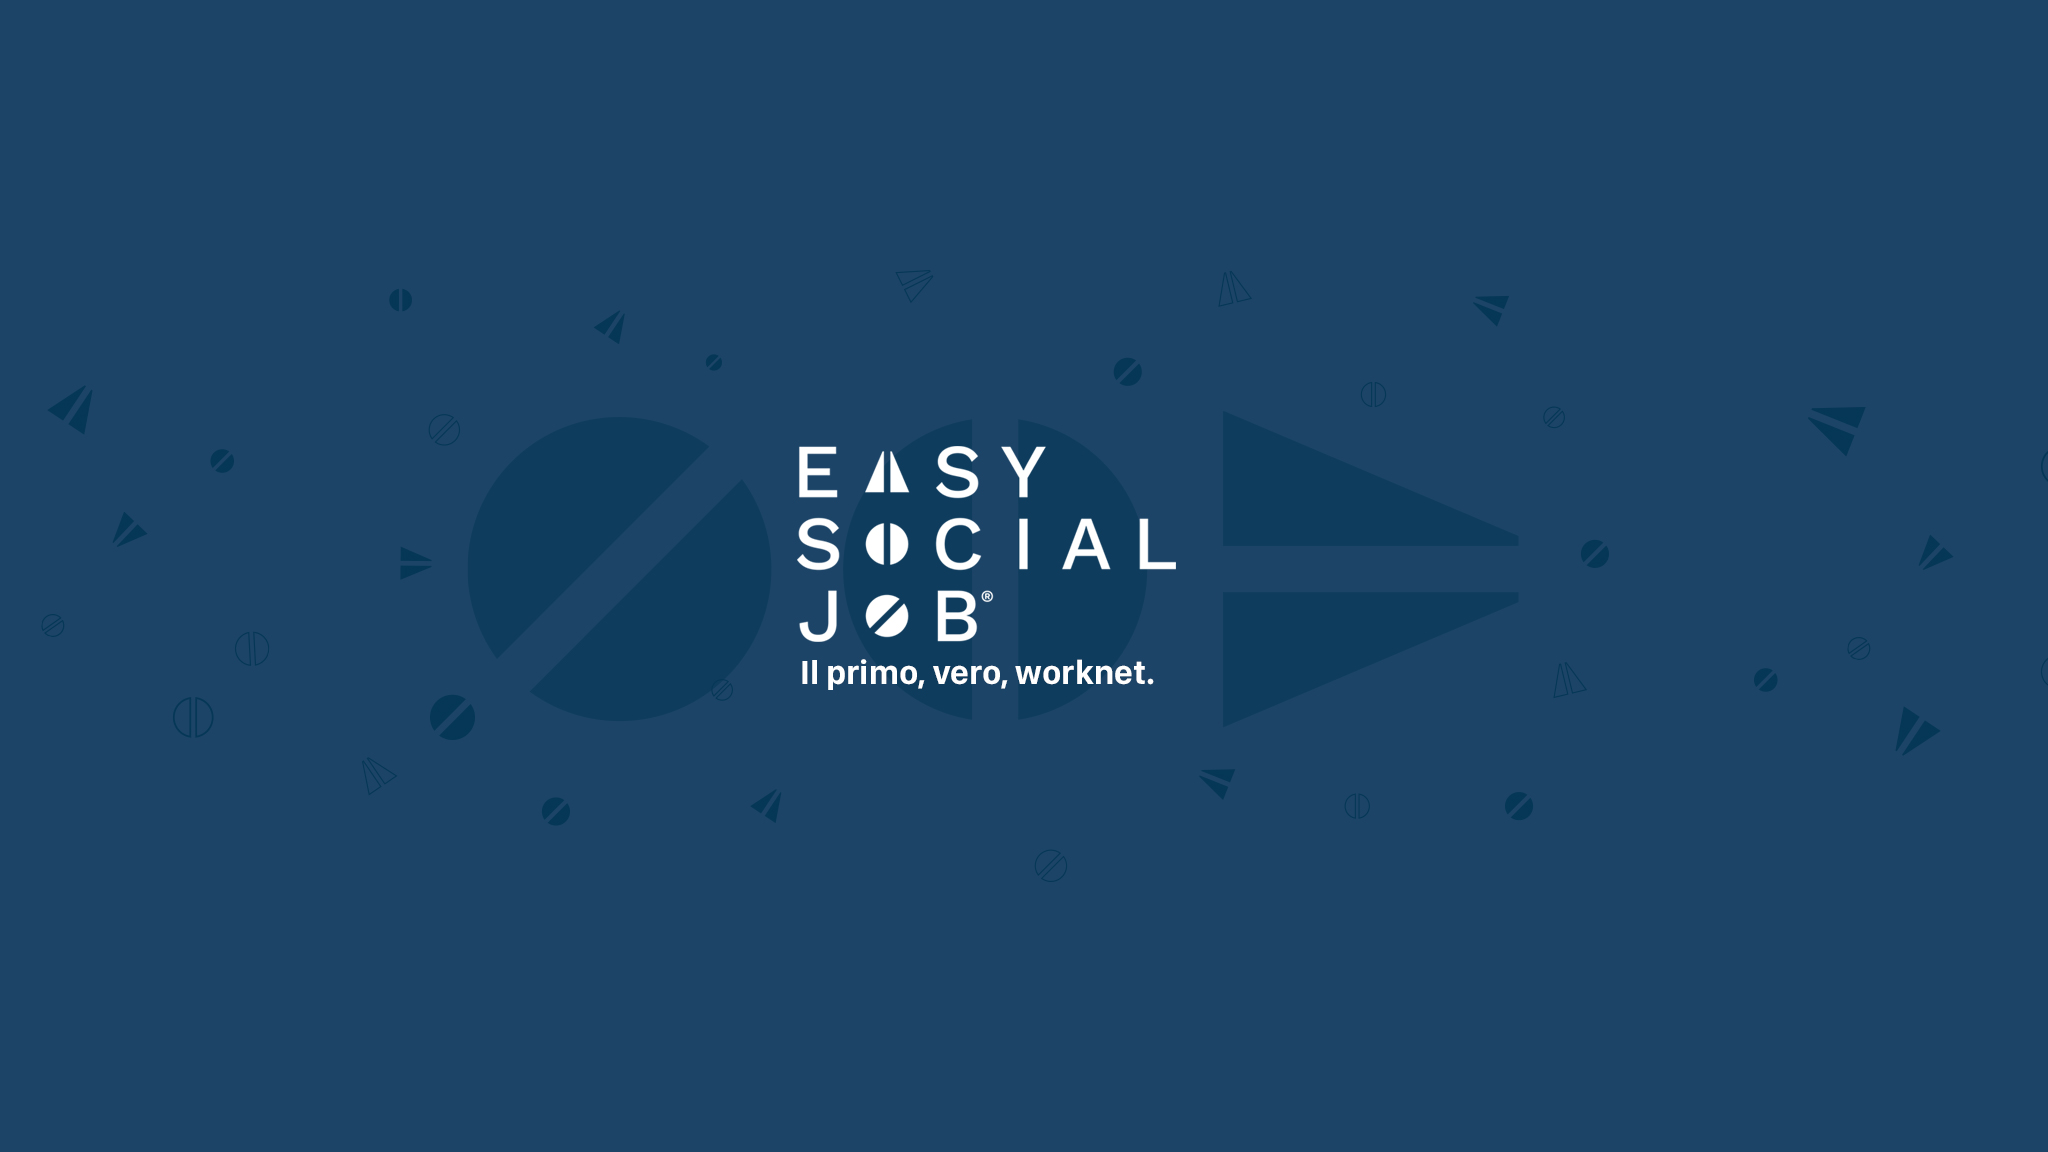 Easy Social Job - Worknet